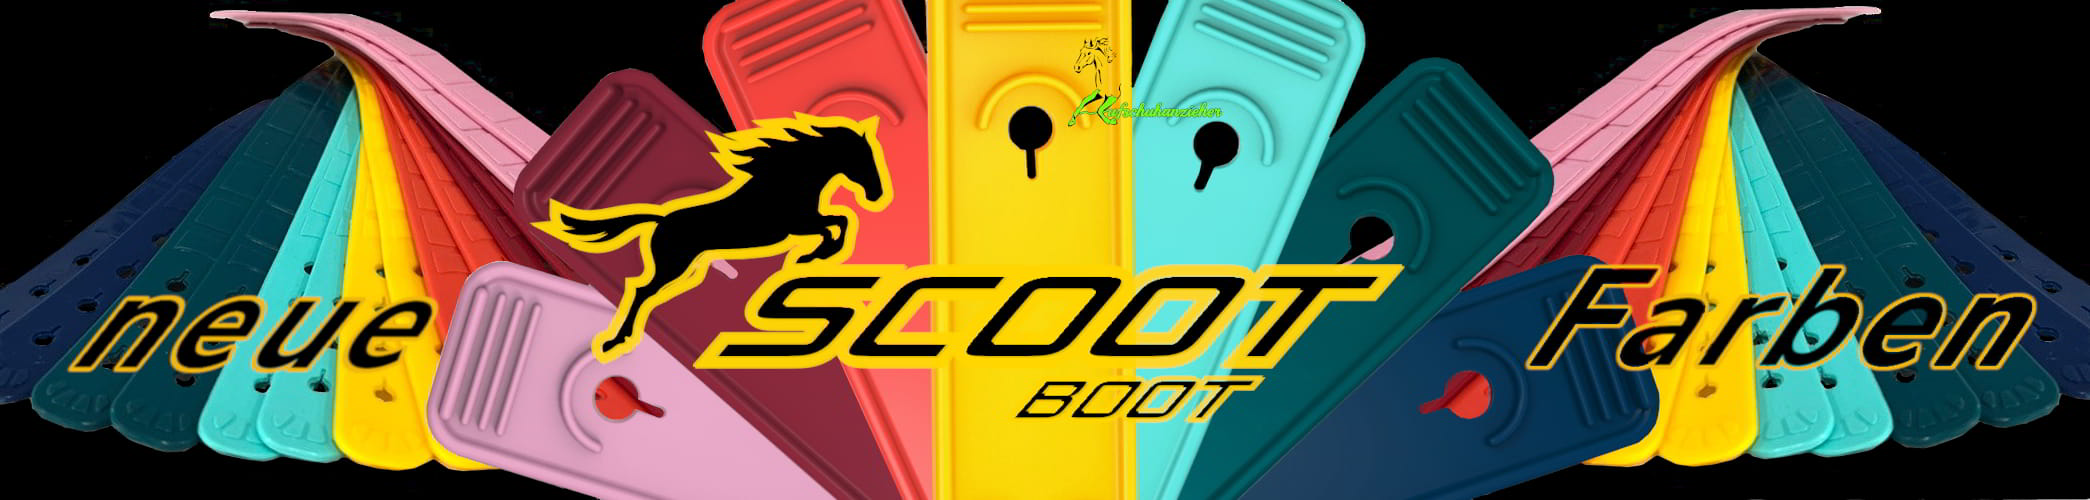 Scoot Boots neue Farben_fan_2022HGs_Slider_web